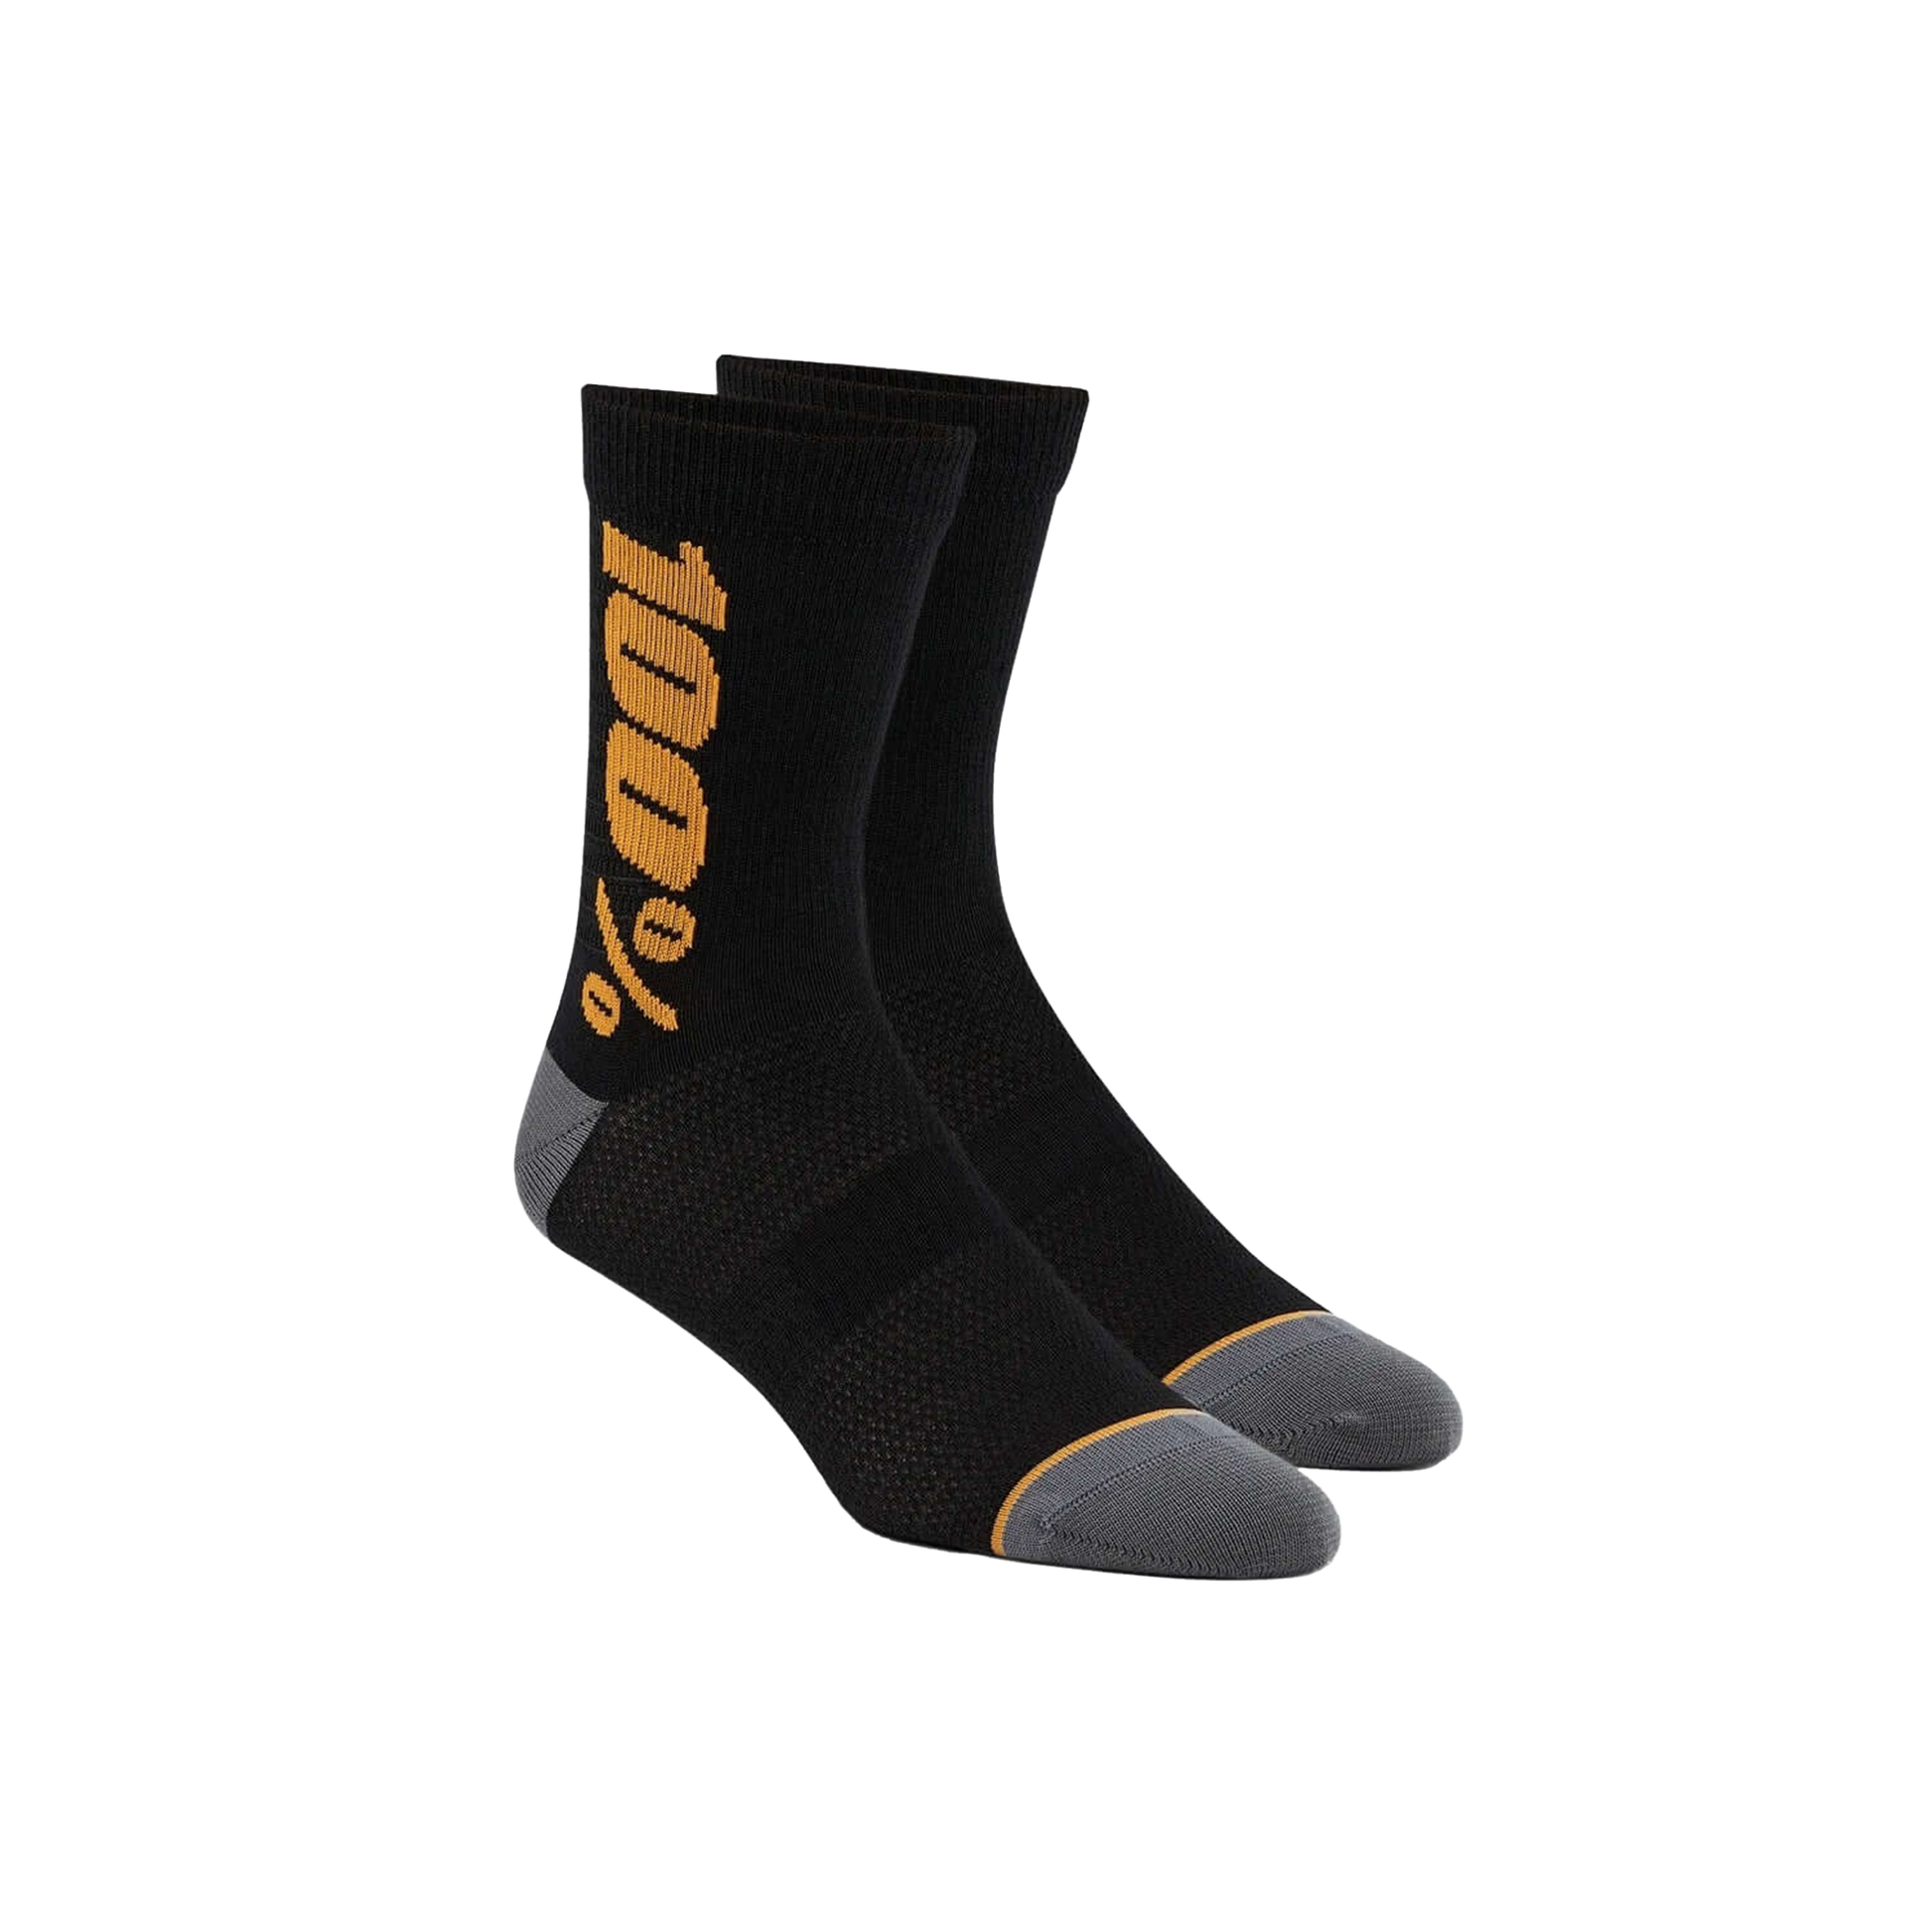 100% Rythym Merino Wool Performance Socks Black/Bronze Bike Socks